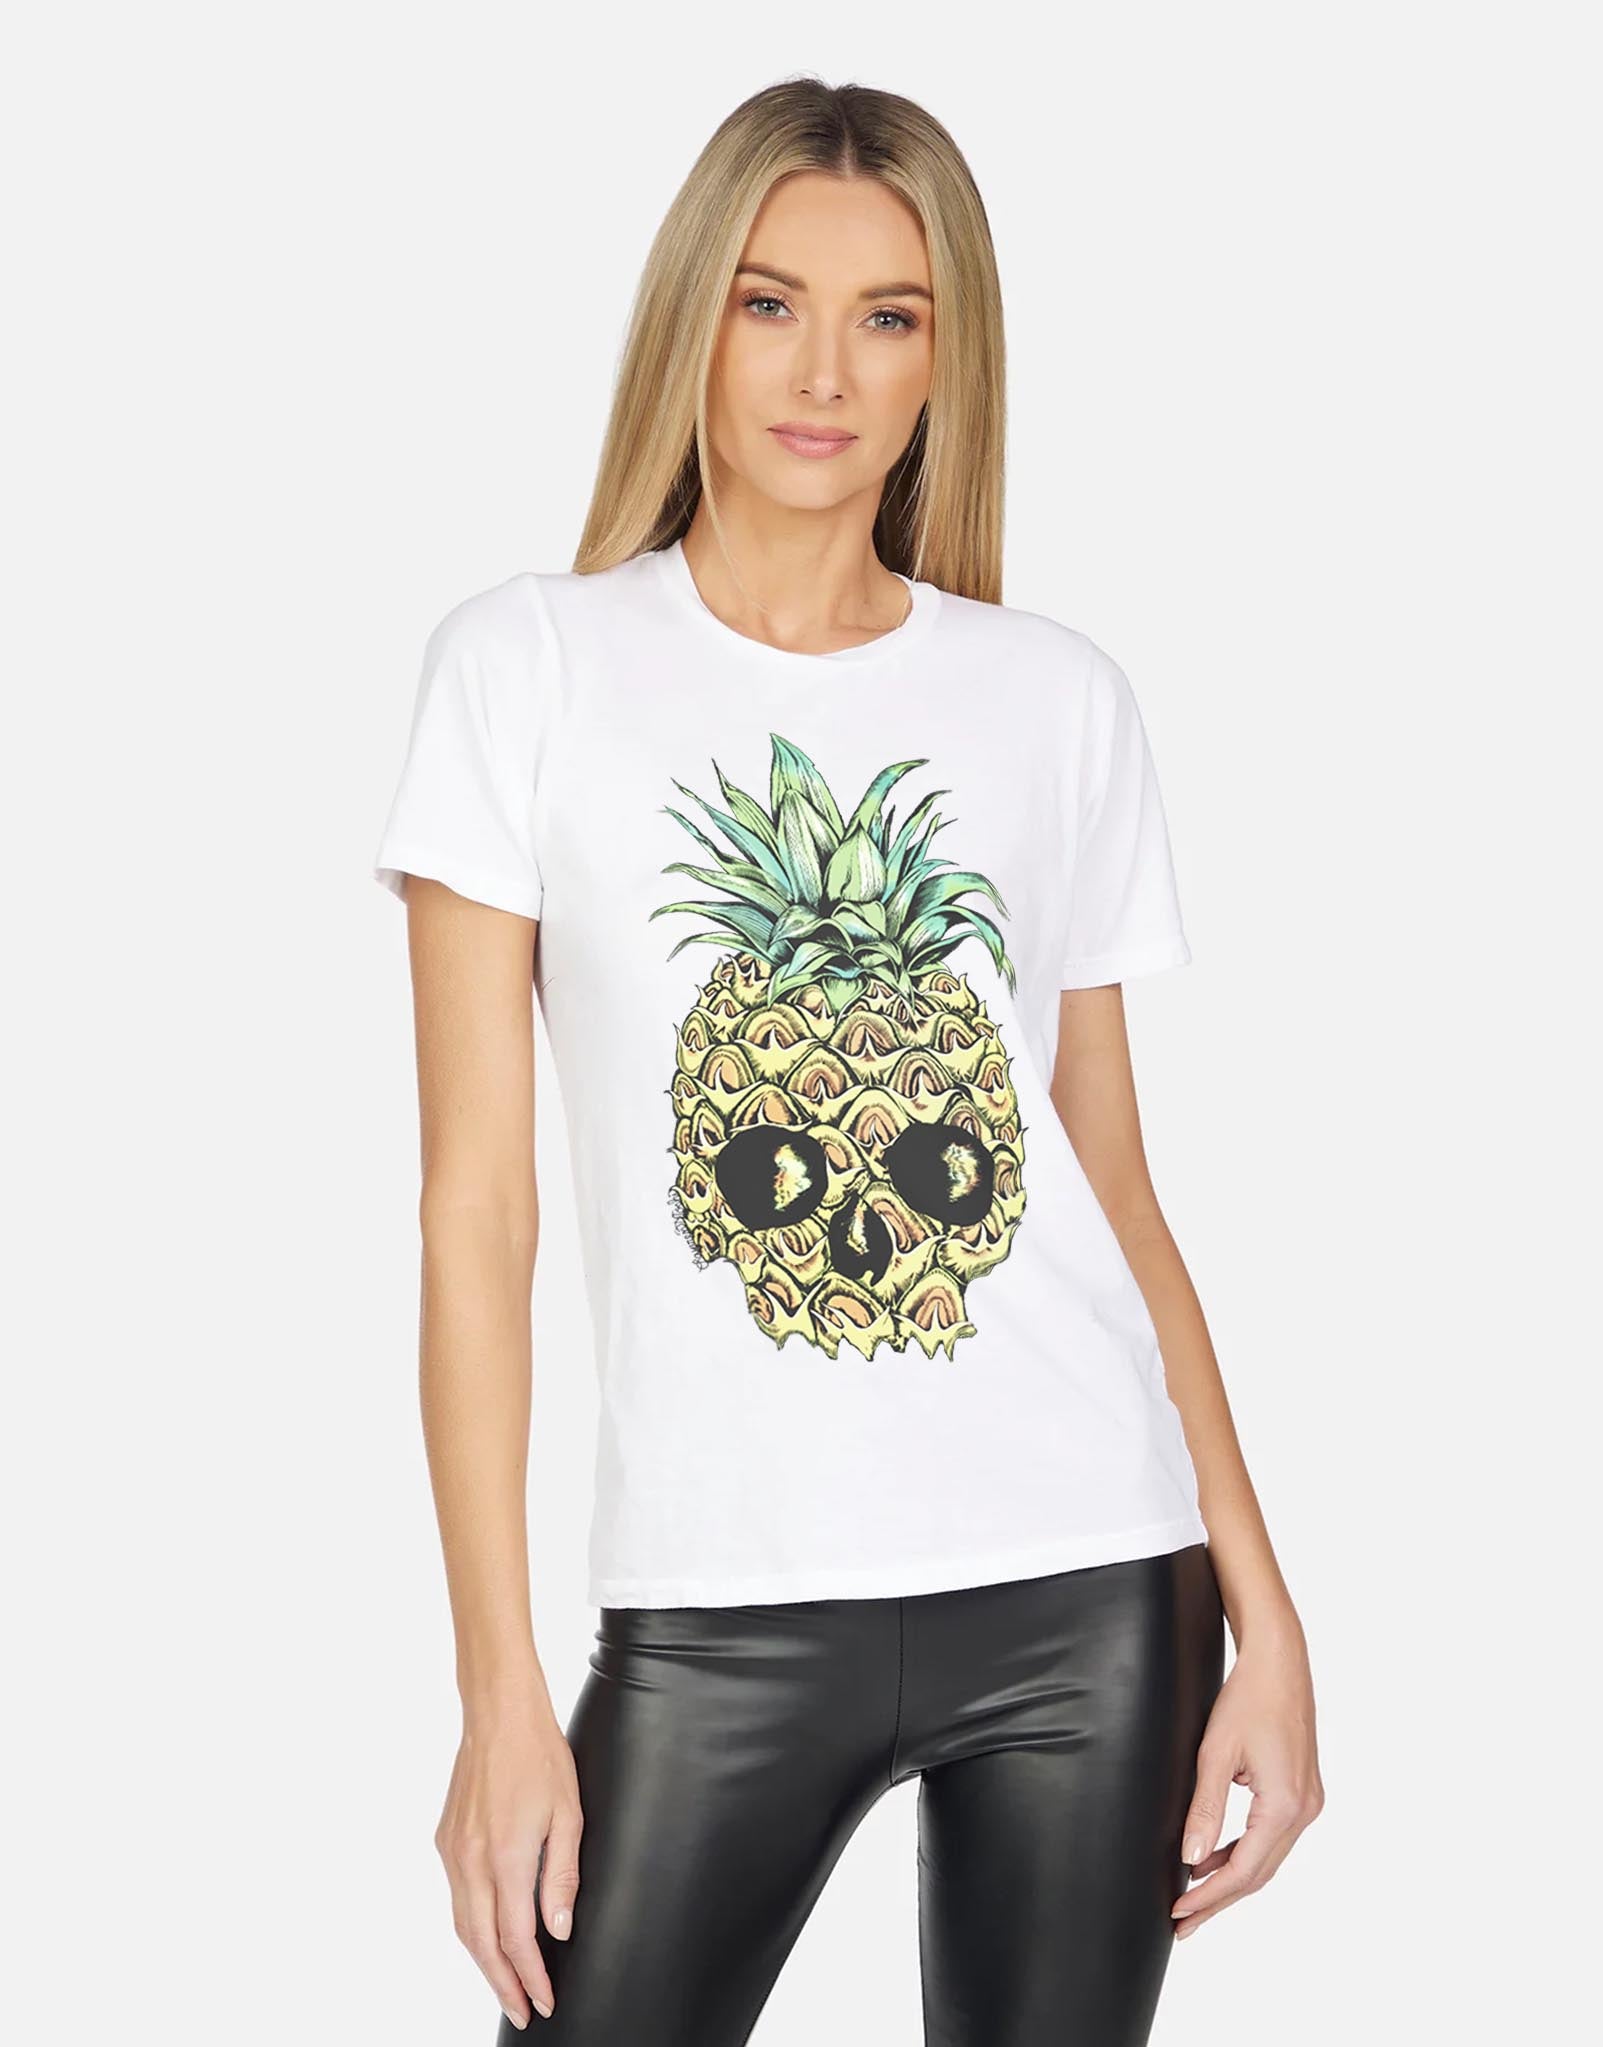 Croft X Pineapple Skull